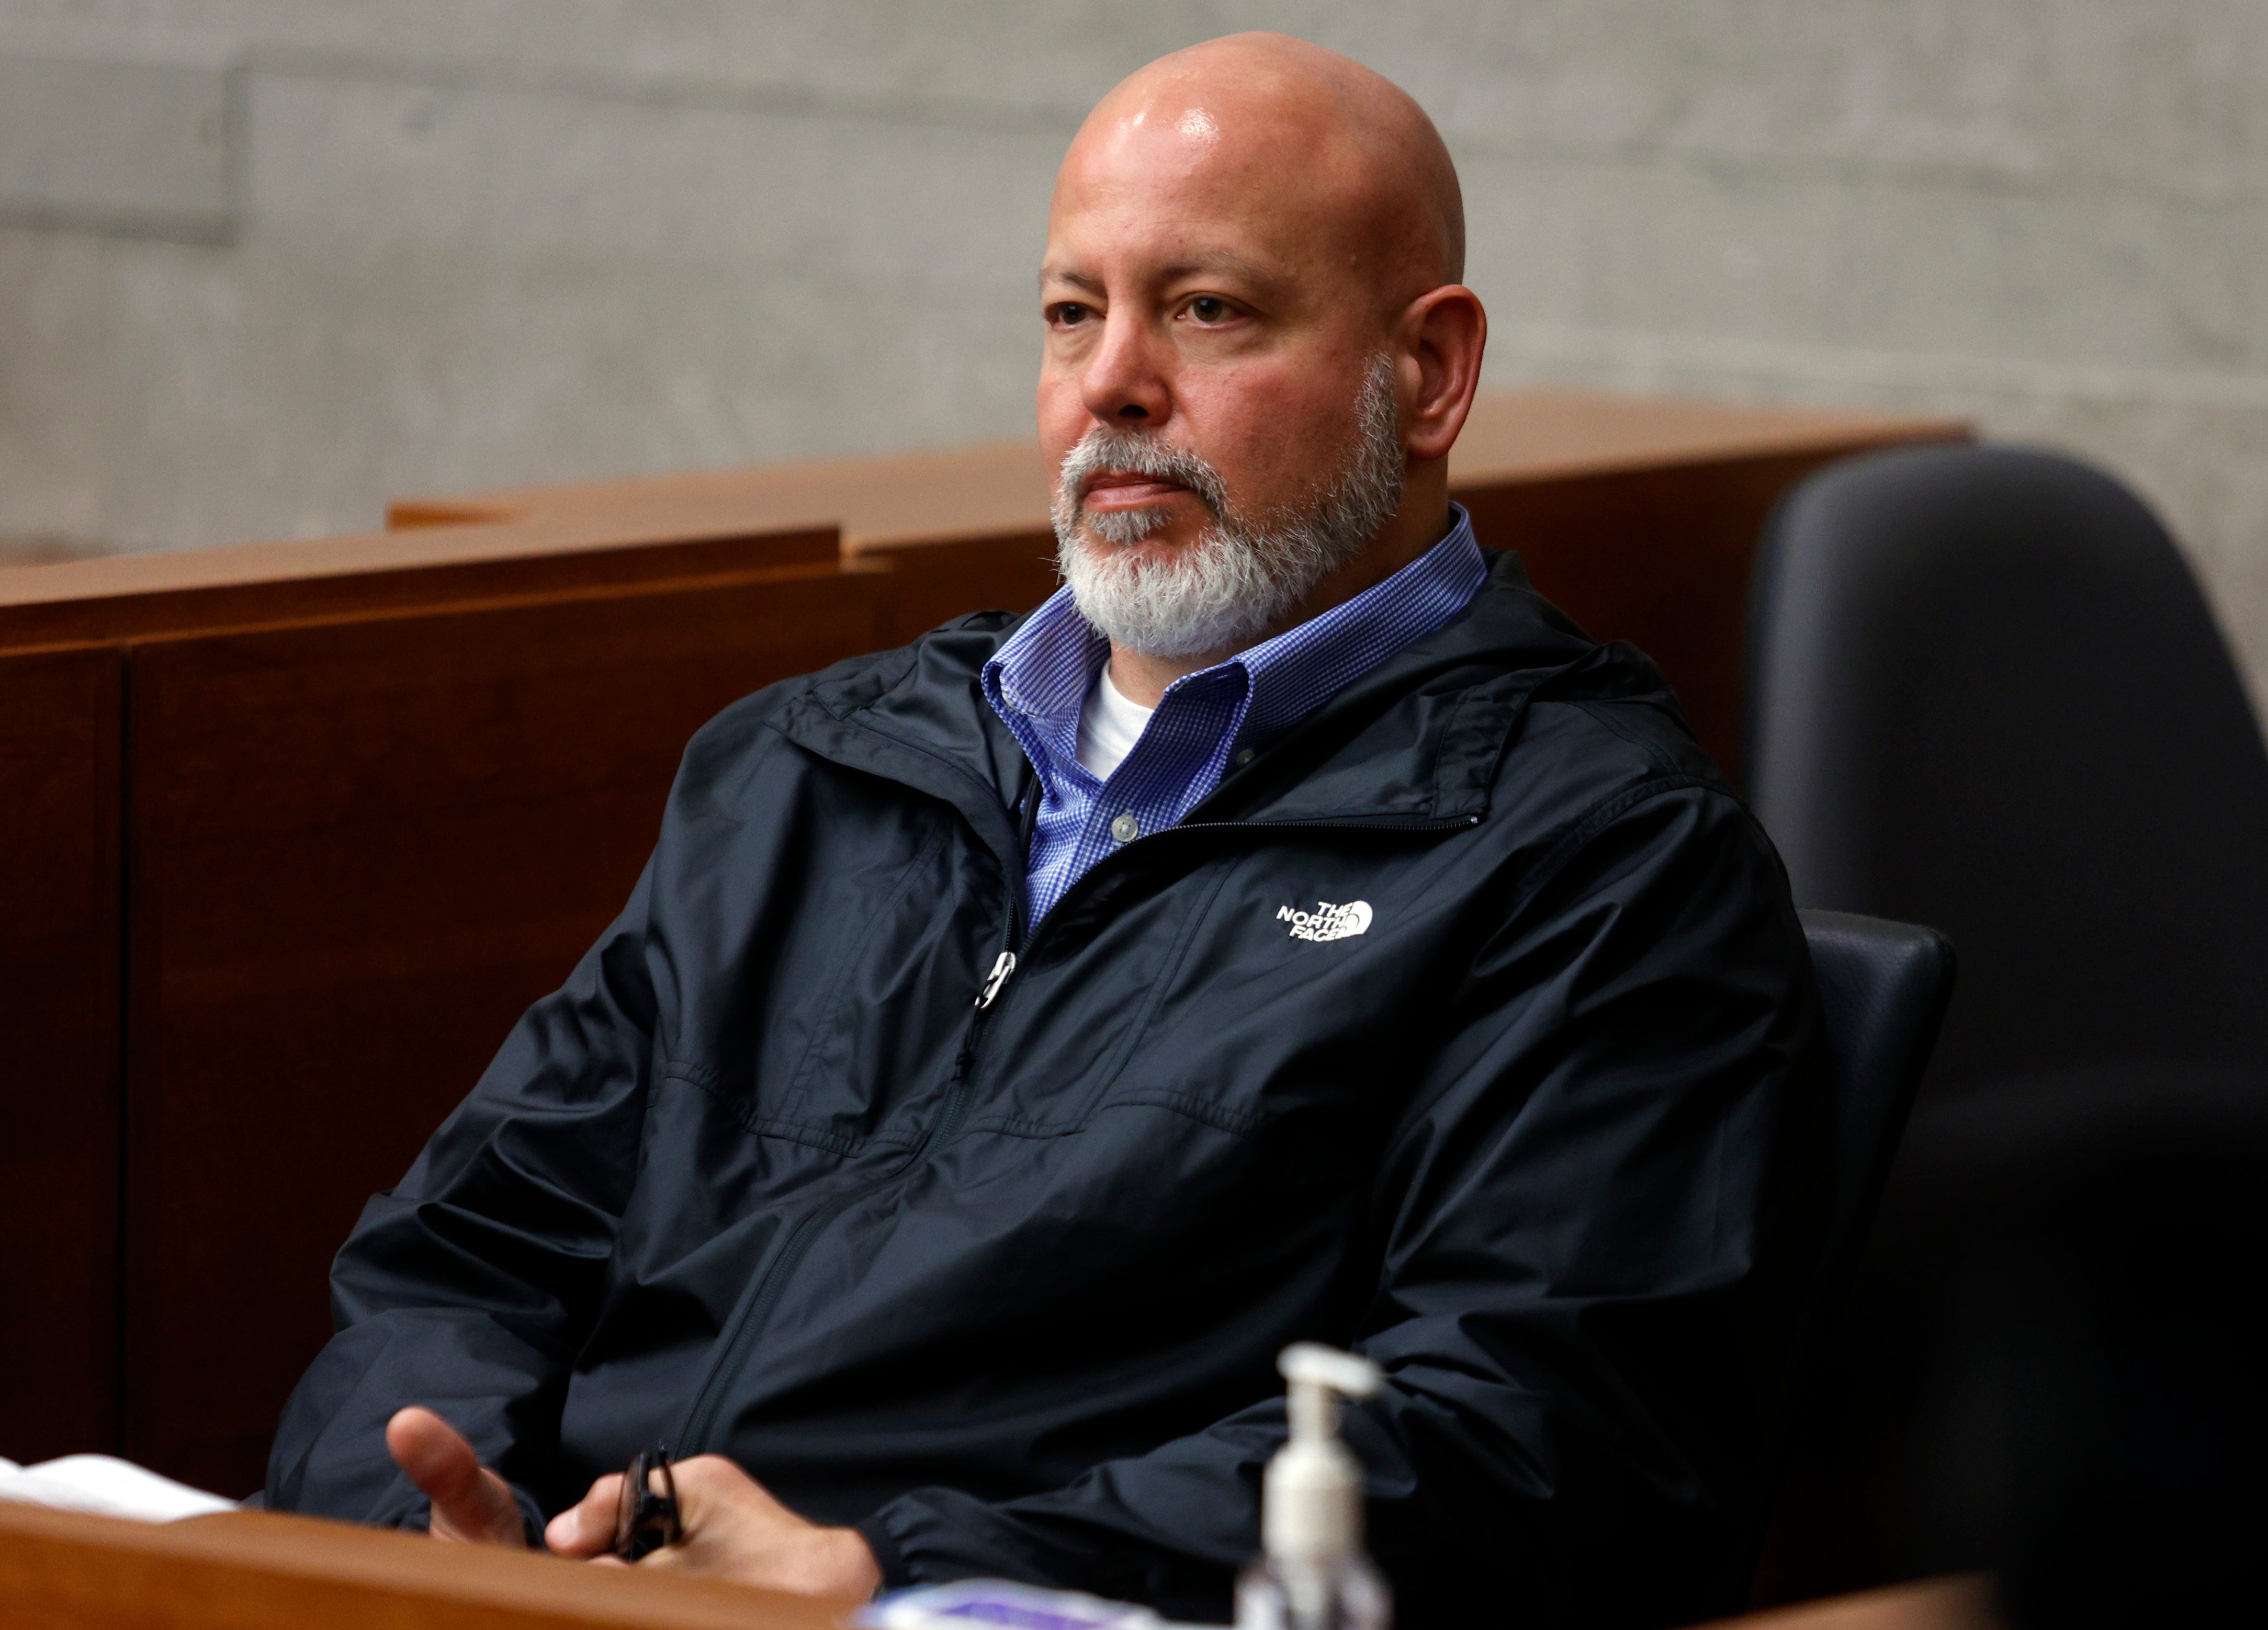 Columbus detective Jeffrey Huhn testifies during Thursday’s court hearing